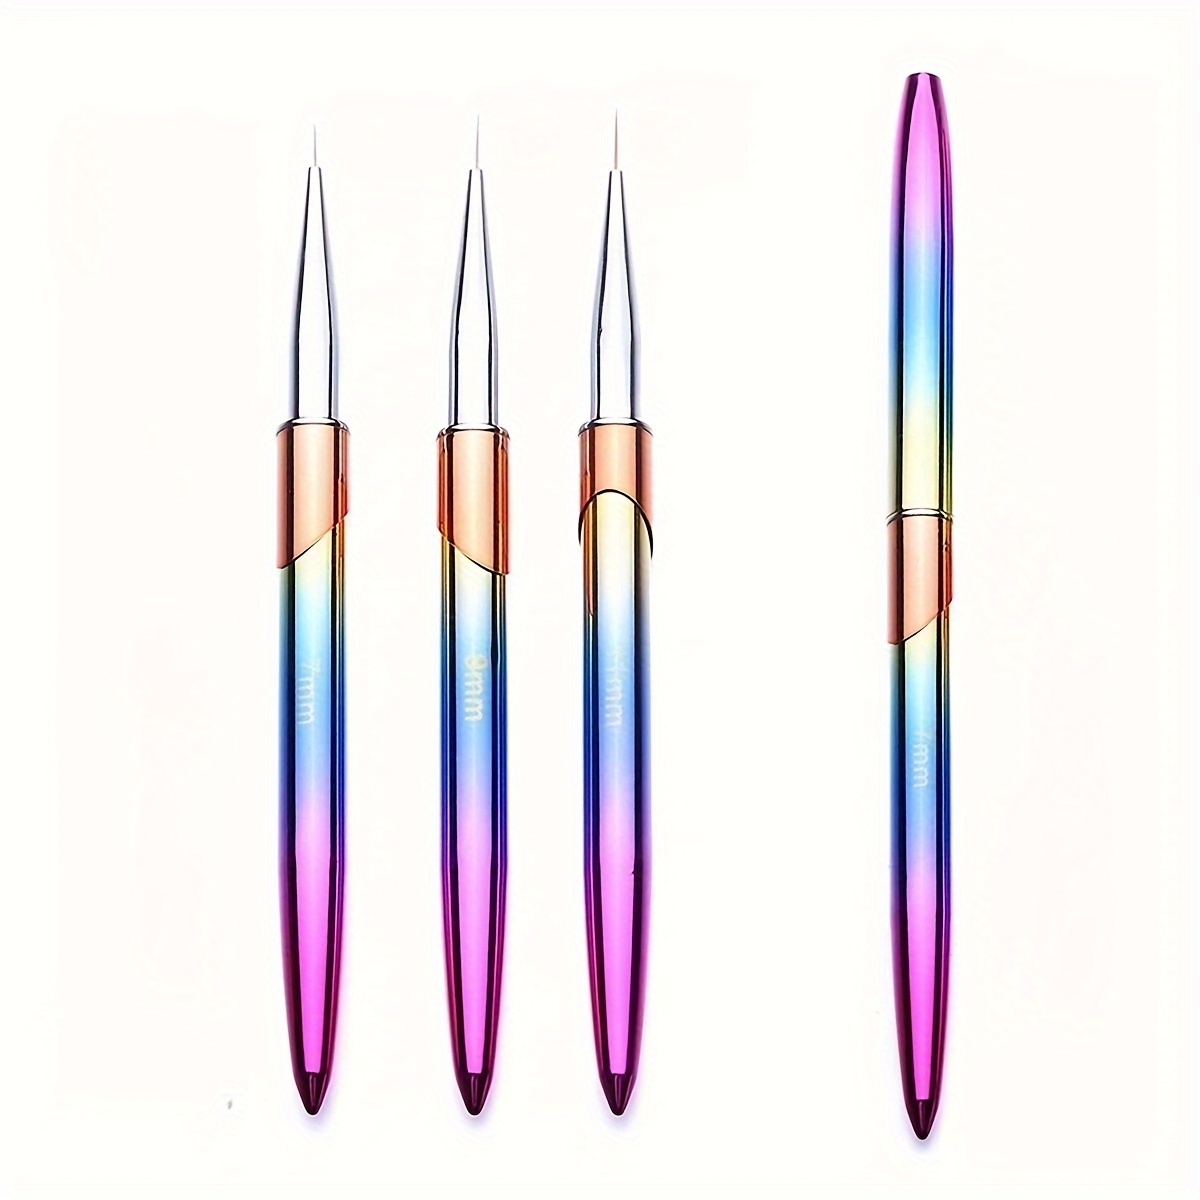 Waroomhouse 5Pcs Nail Art Brush Elongated Lines Thin Details Pink Metal  Handle Nail Art Brush Kit Tools Professional Petal Pen Nail Salon 